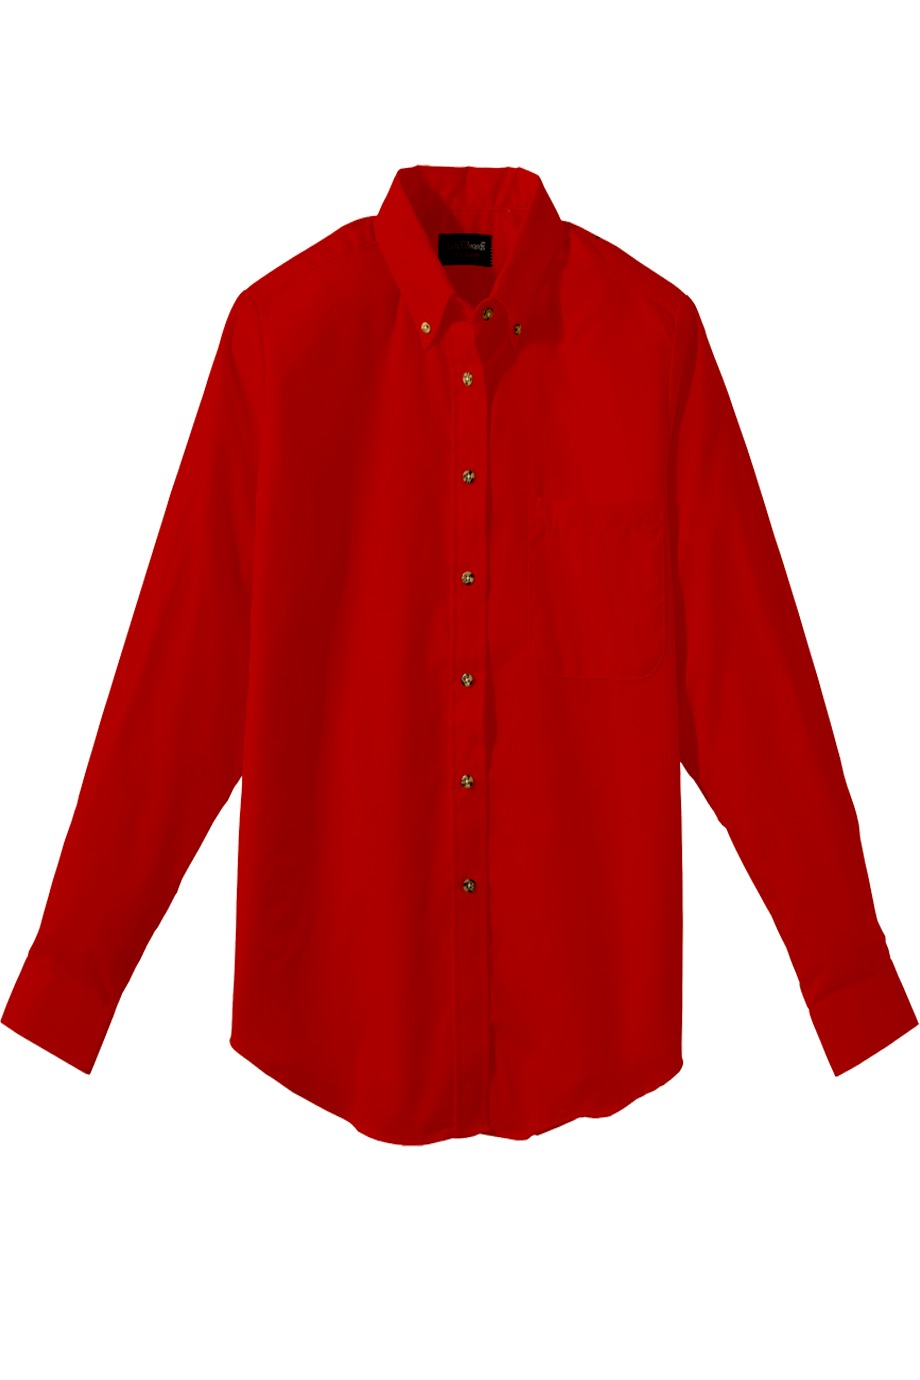 Edwards Garment 5280 - Women's Easy Care Long Sleeve Poplin Shirt